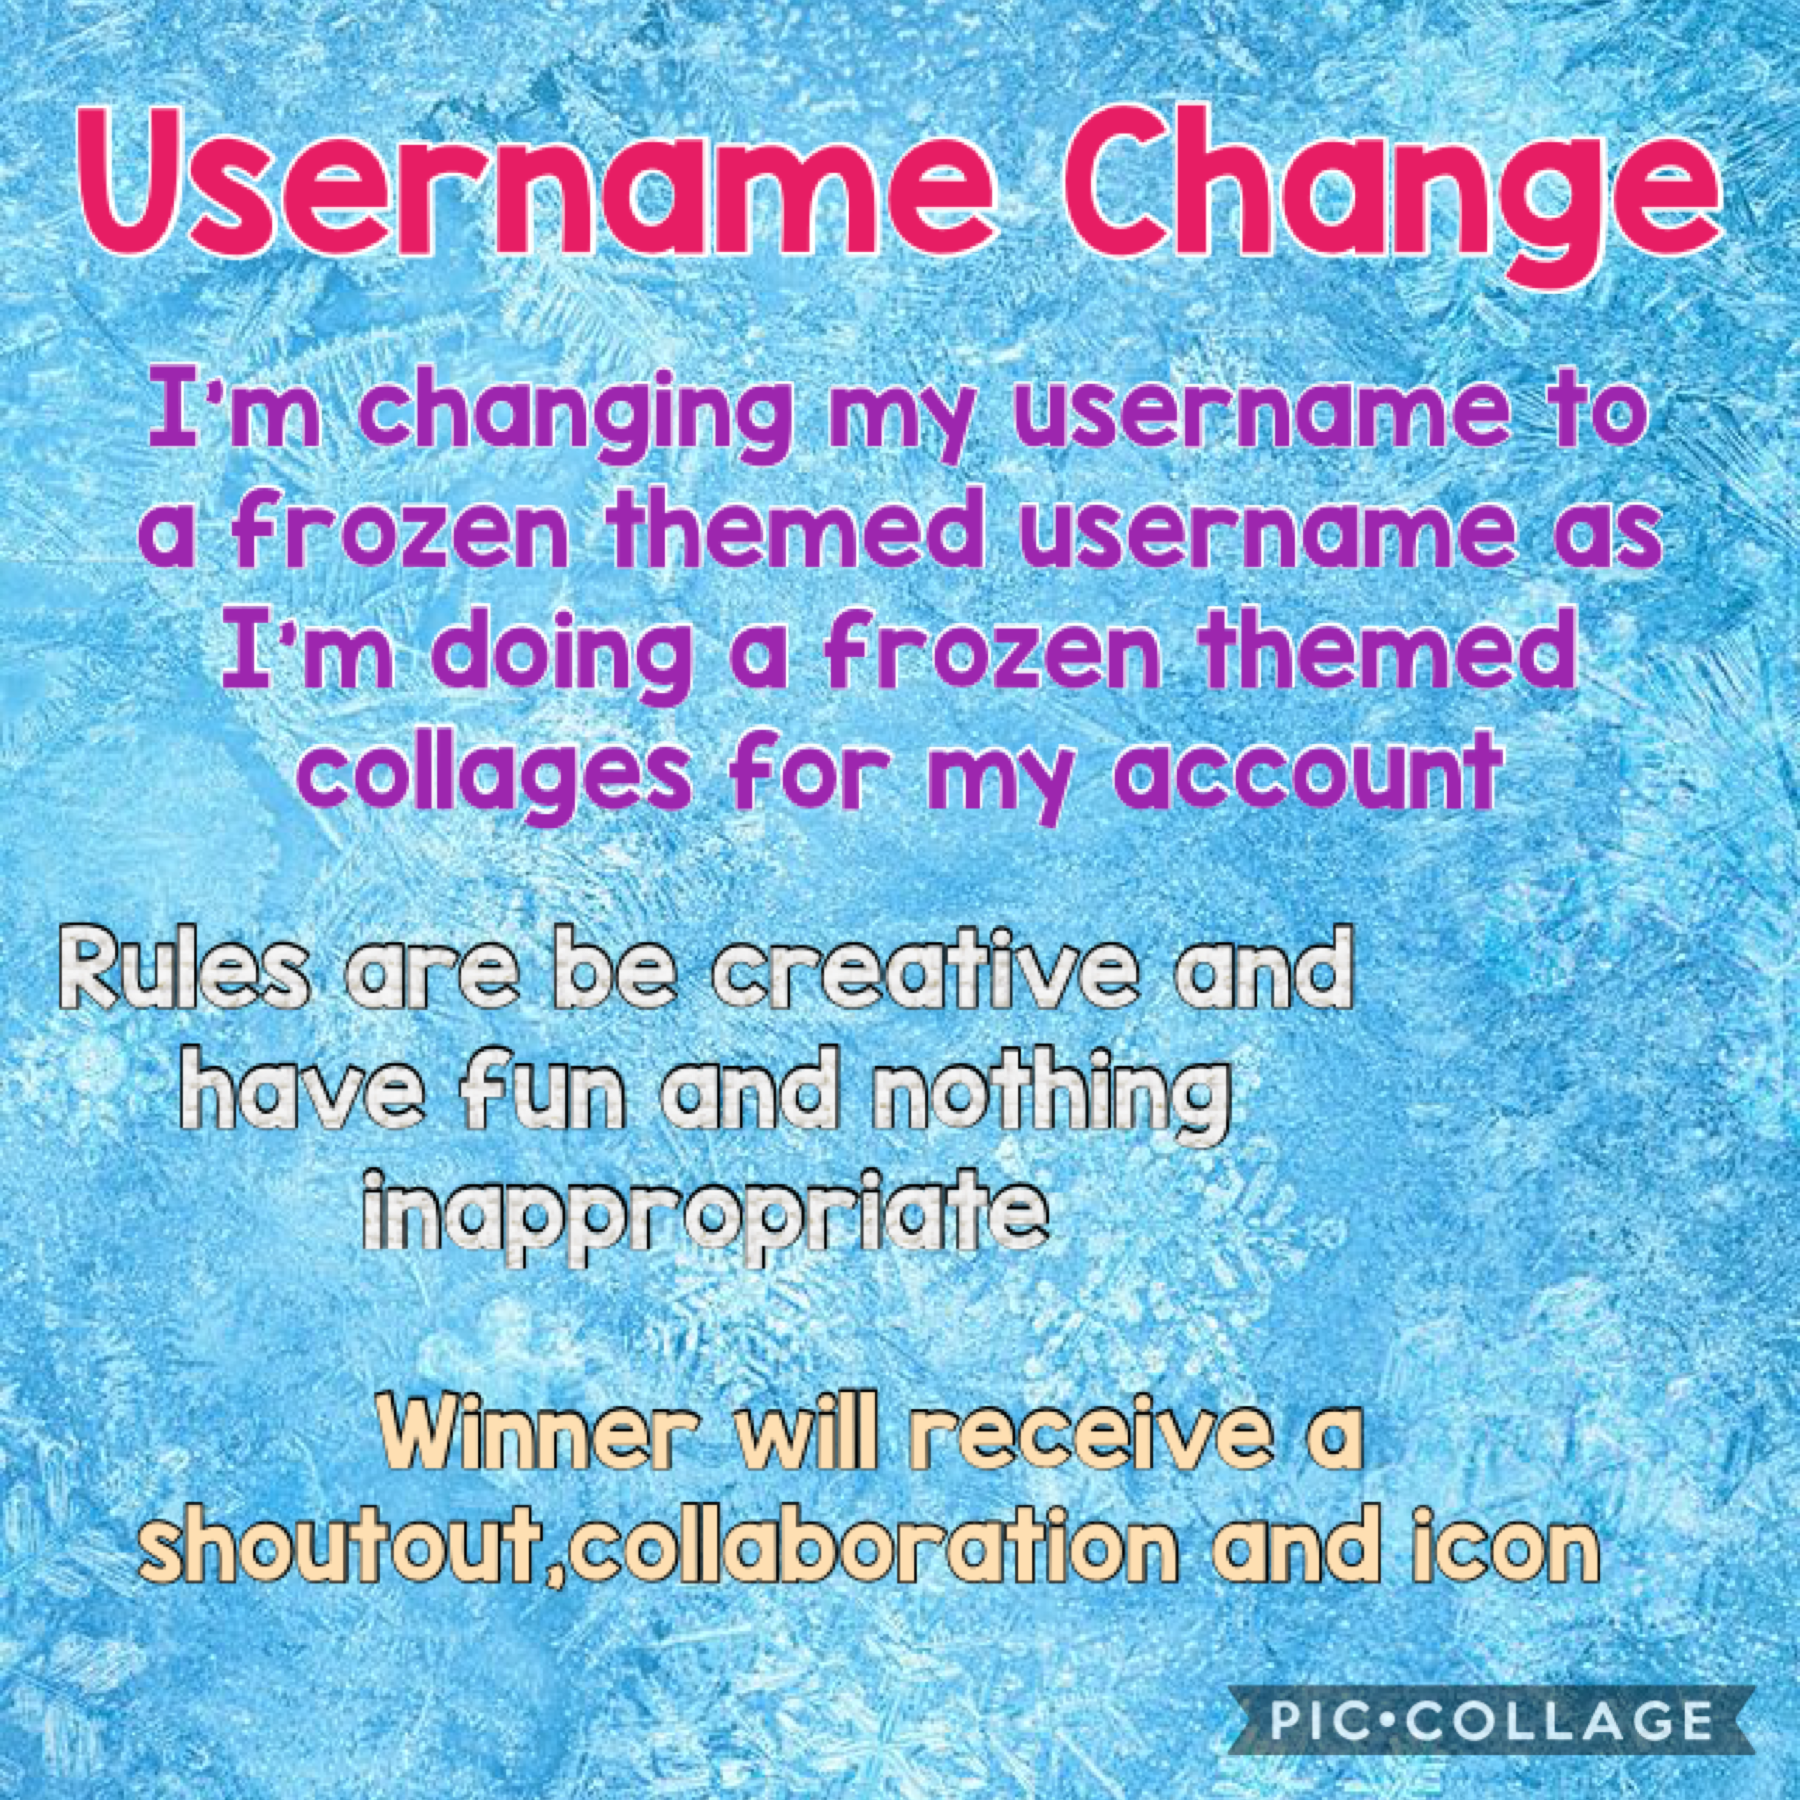 Username change contest